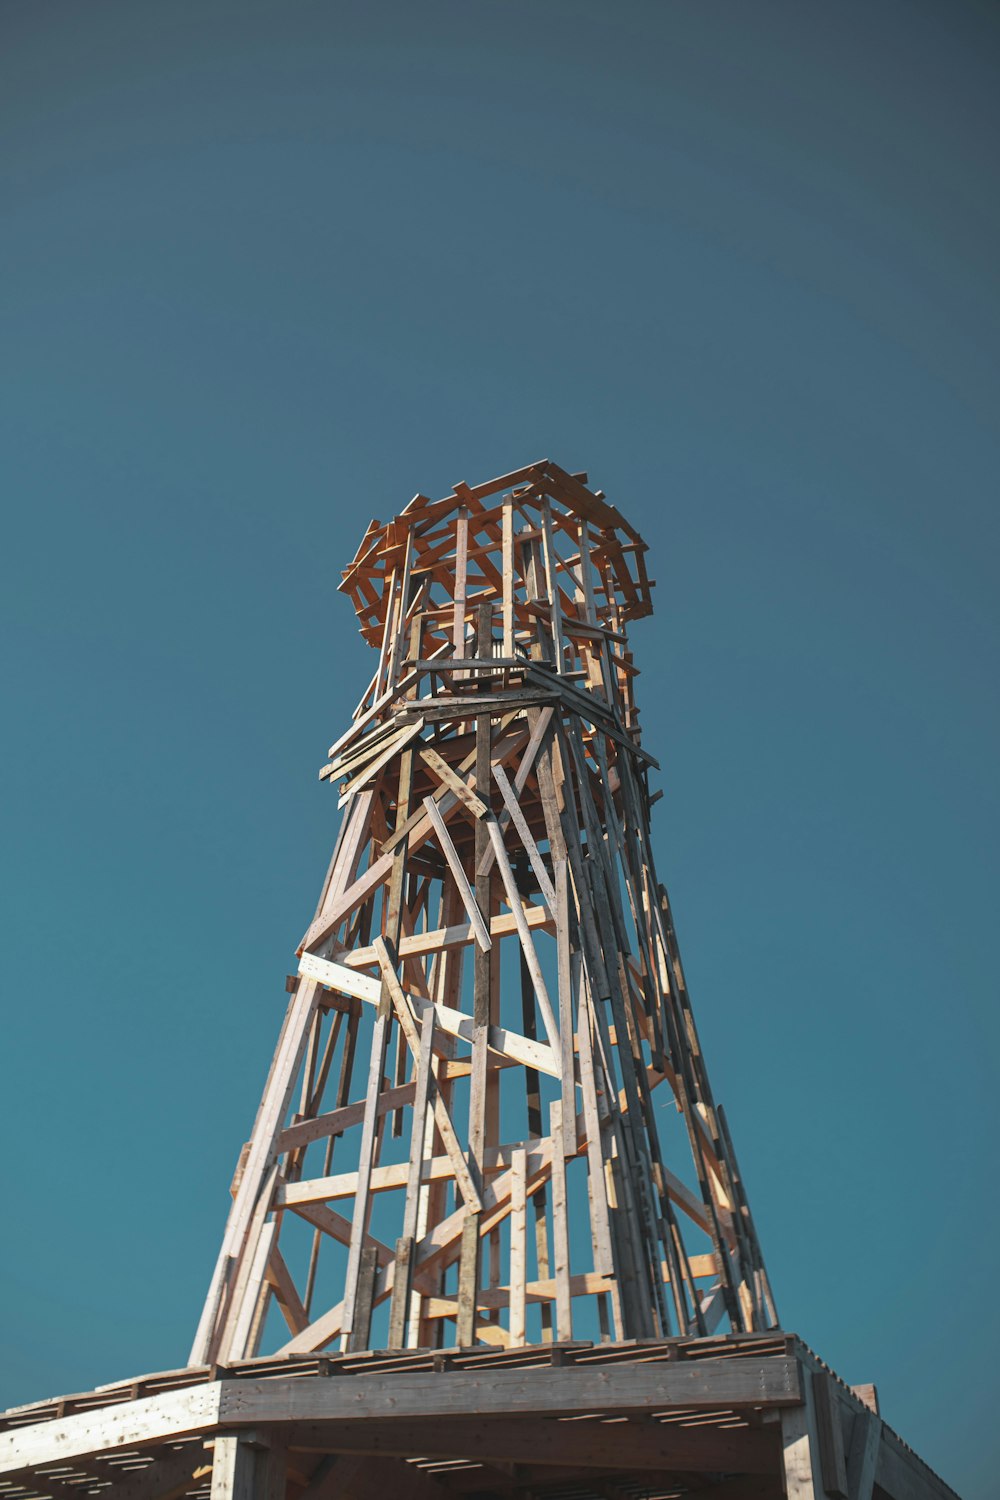 brown metal tower under blue sky during daytime